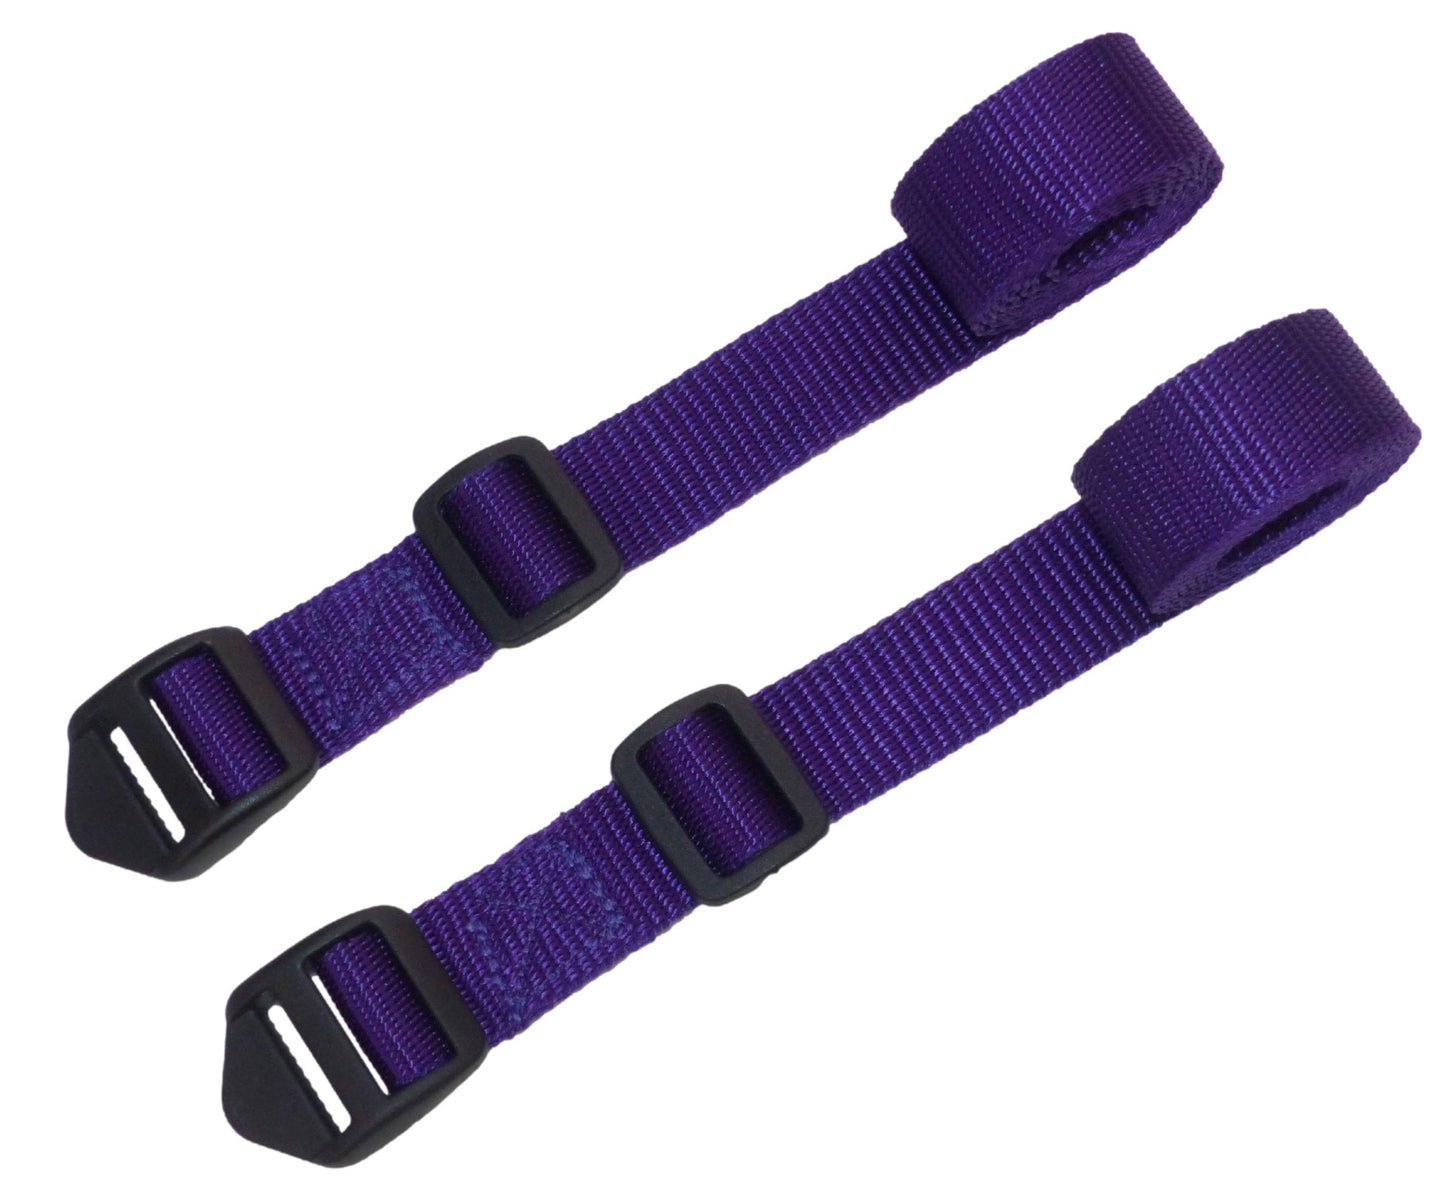 Benristraps 25mm Webbing Strap with Ladderloc Buckle (Pair) in purple